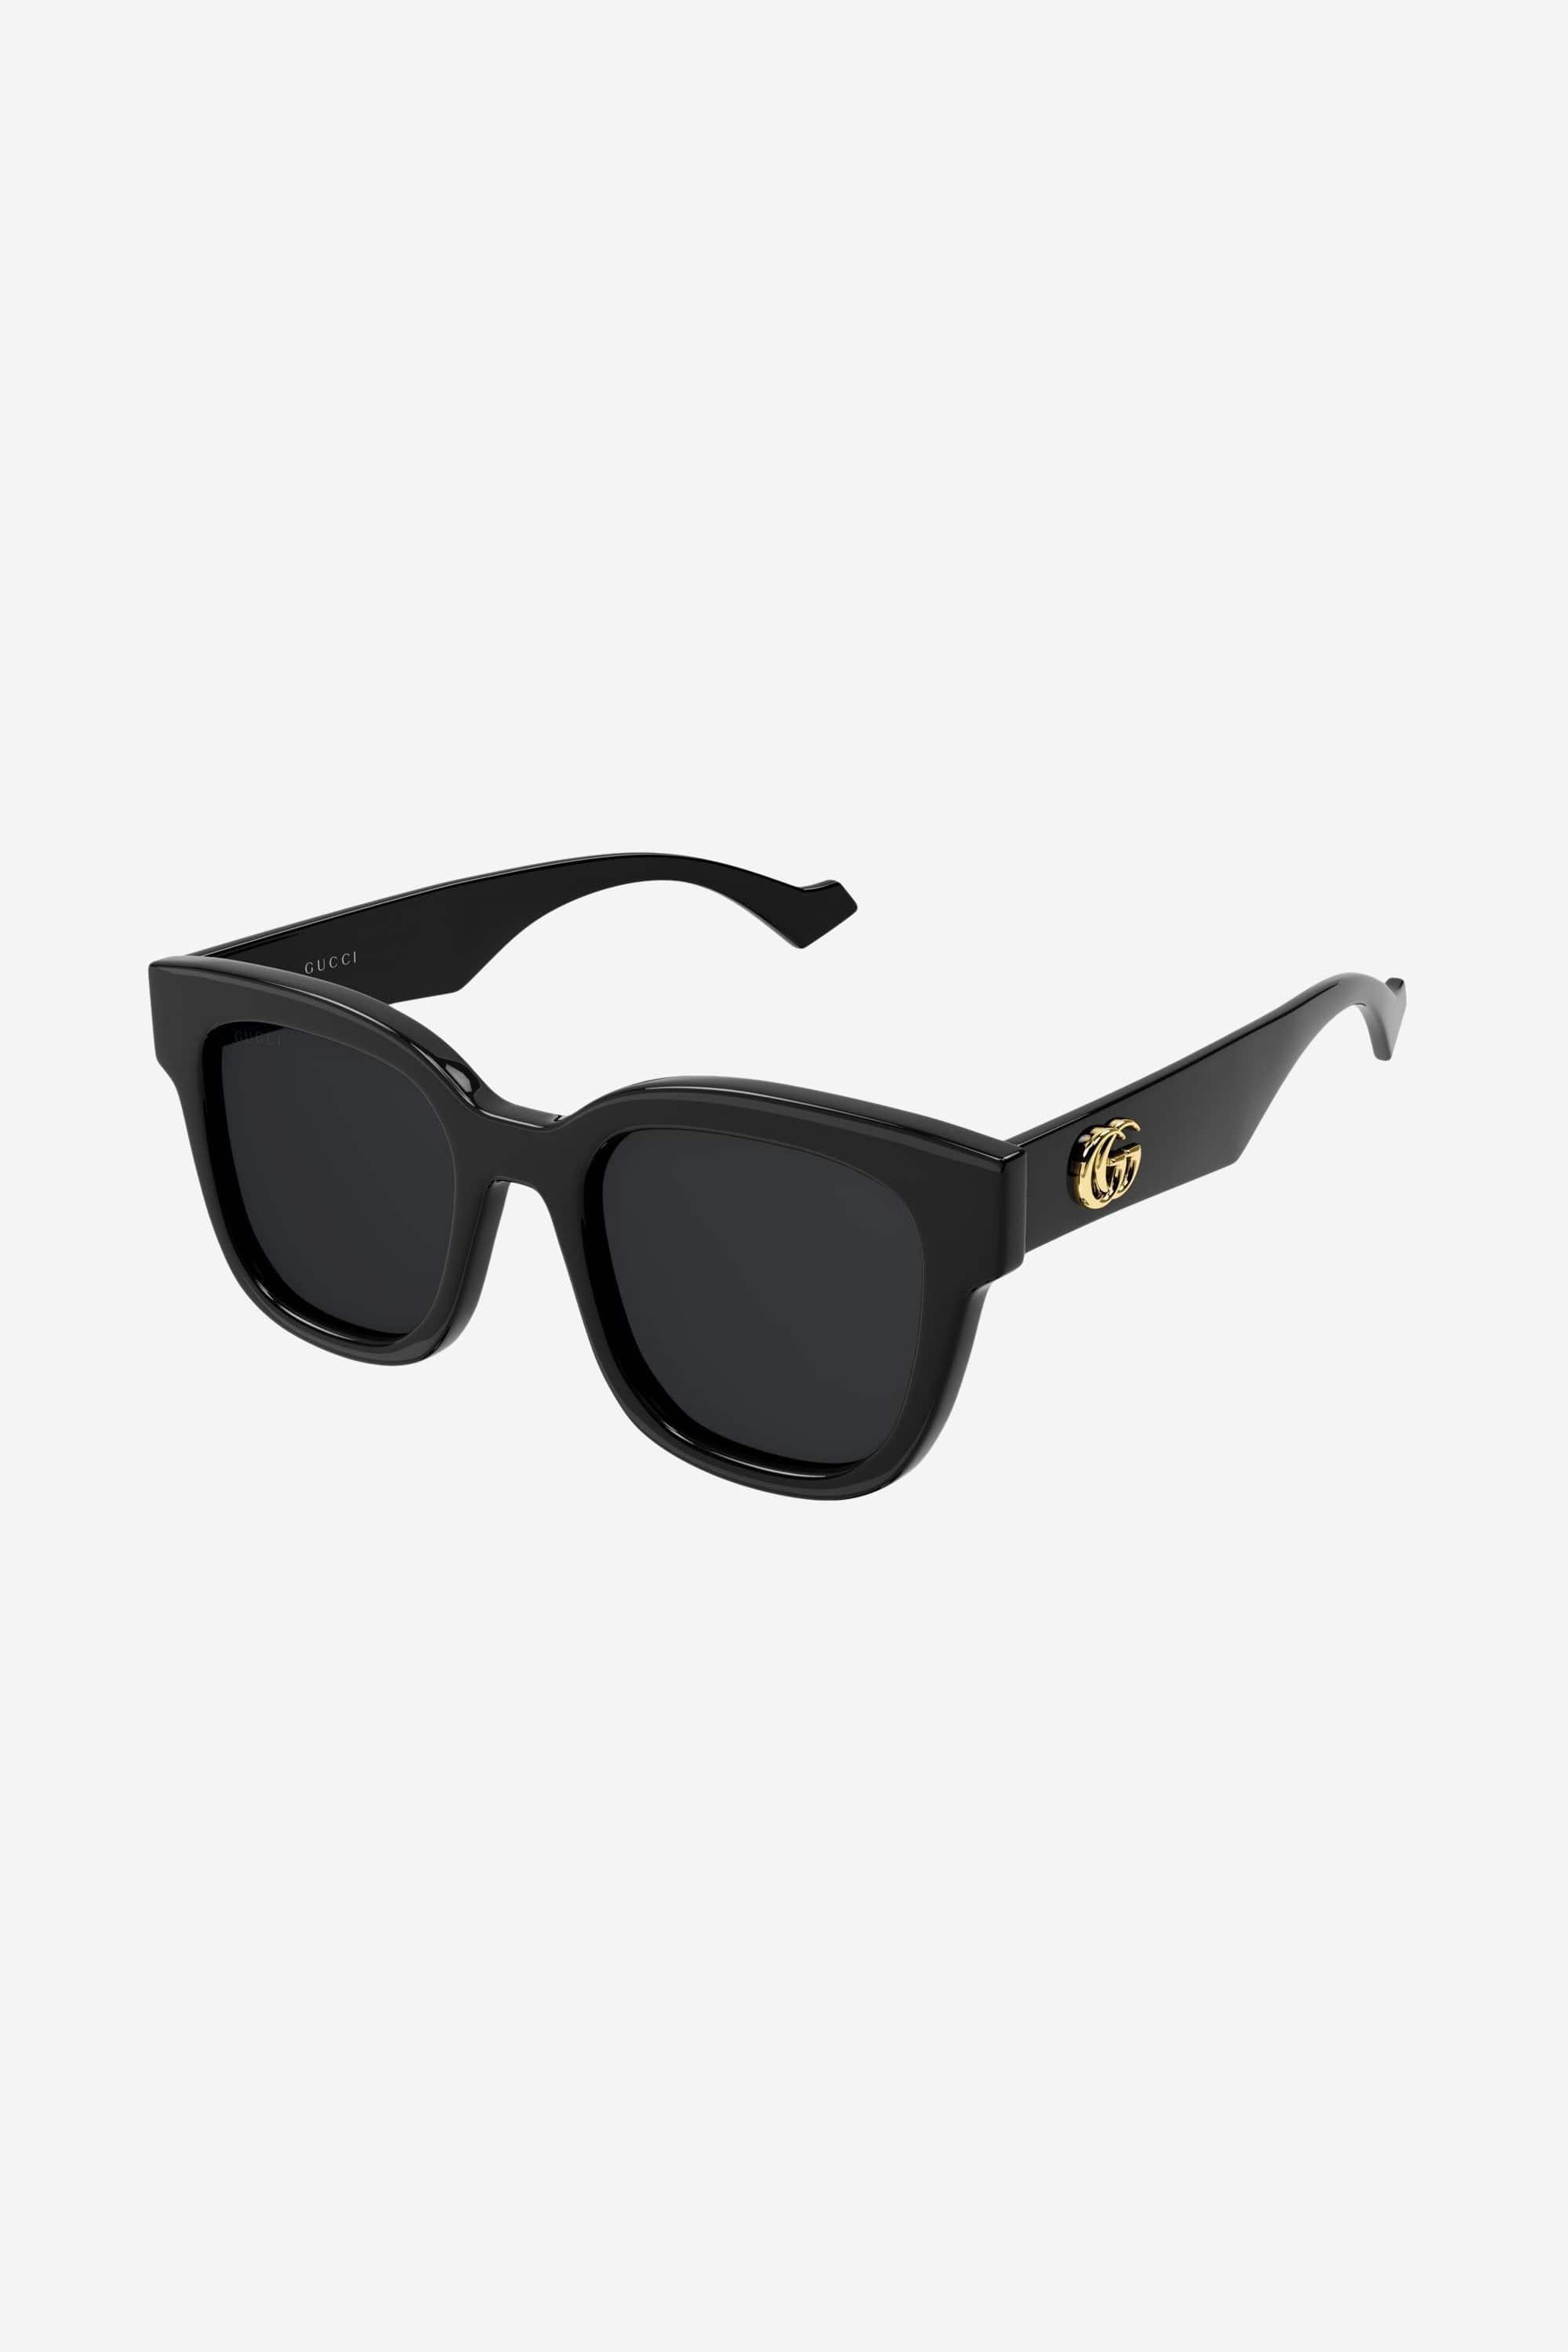 Gucci squared femenine black sunglasses - Eyewear Club